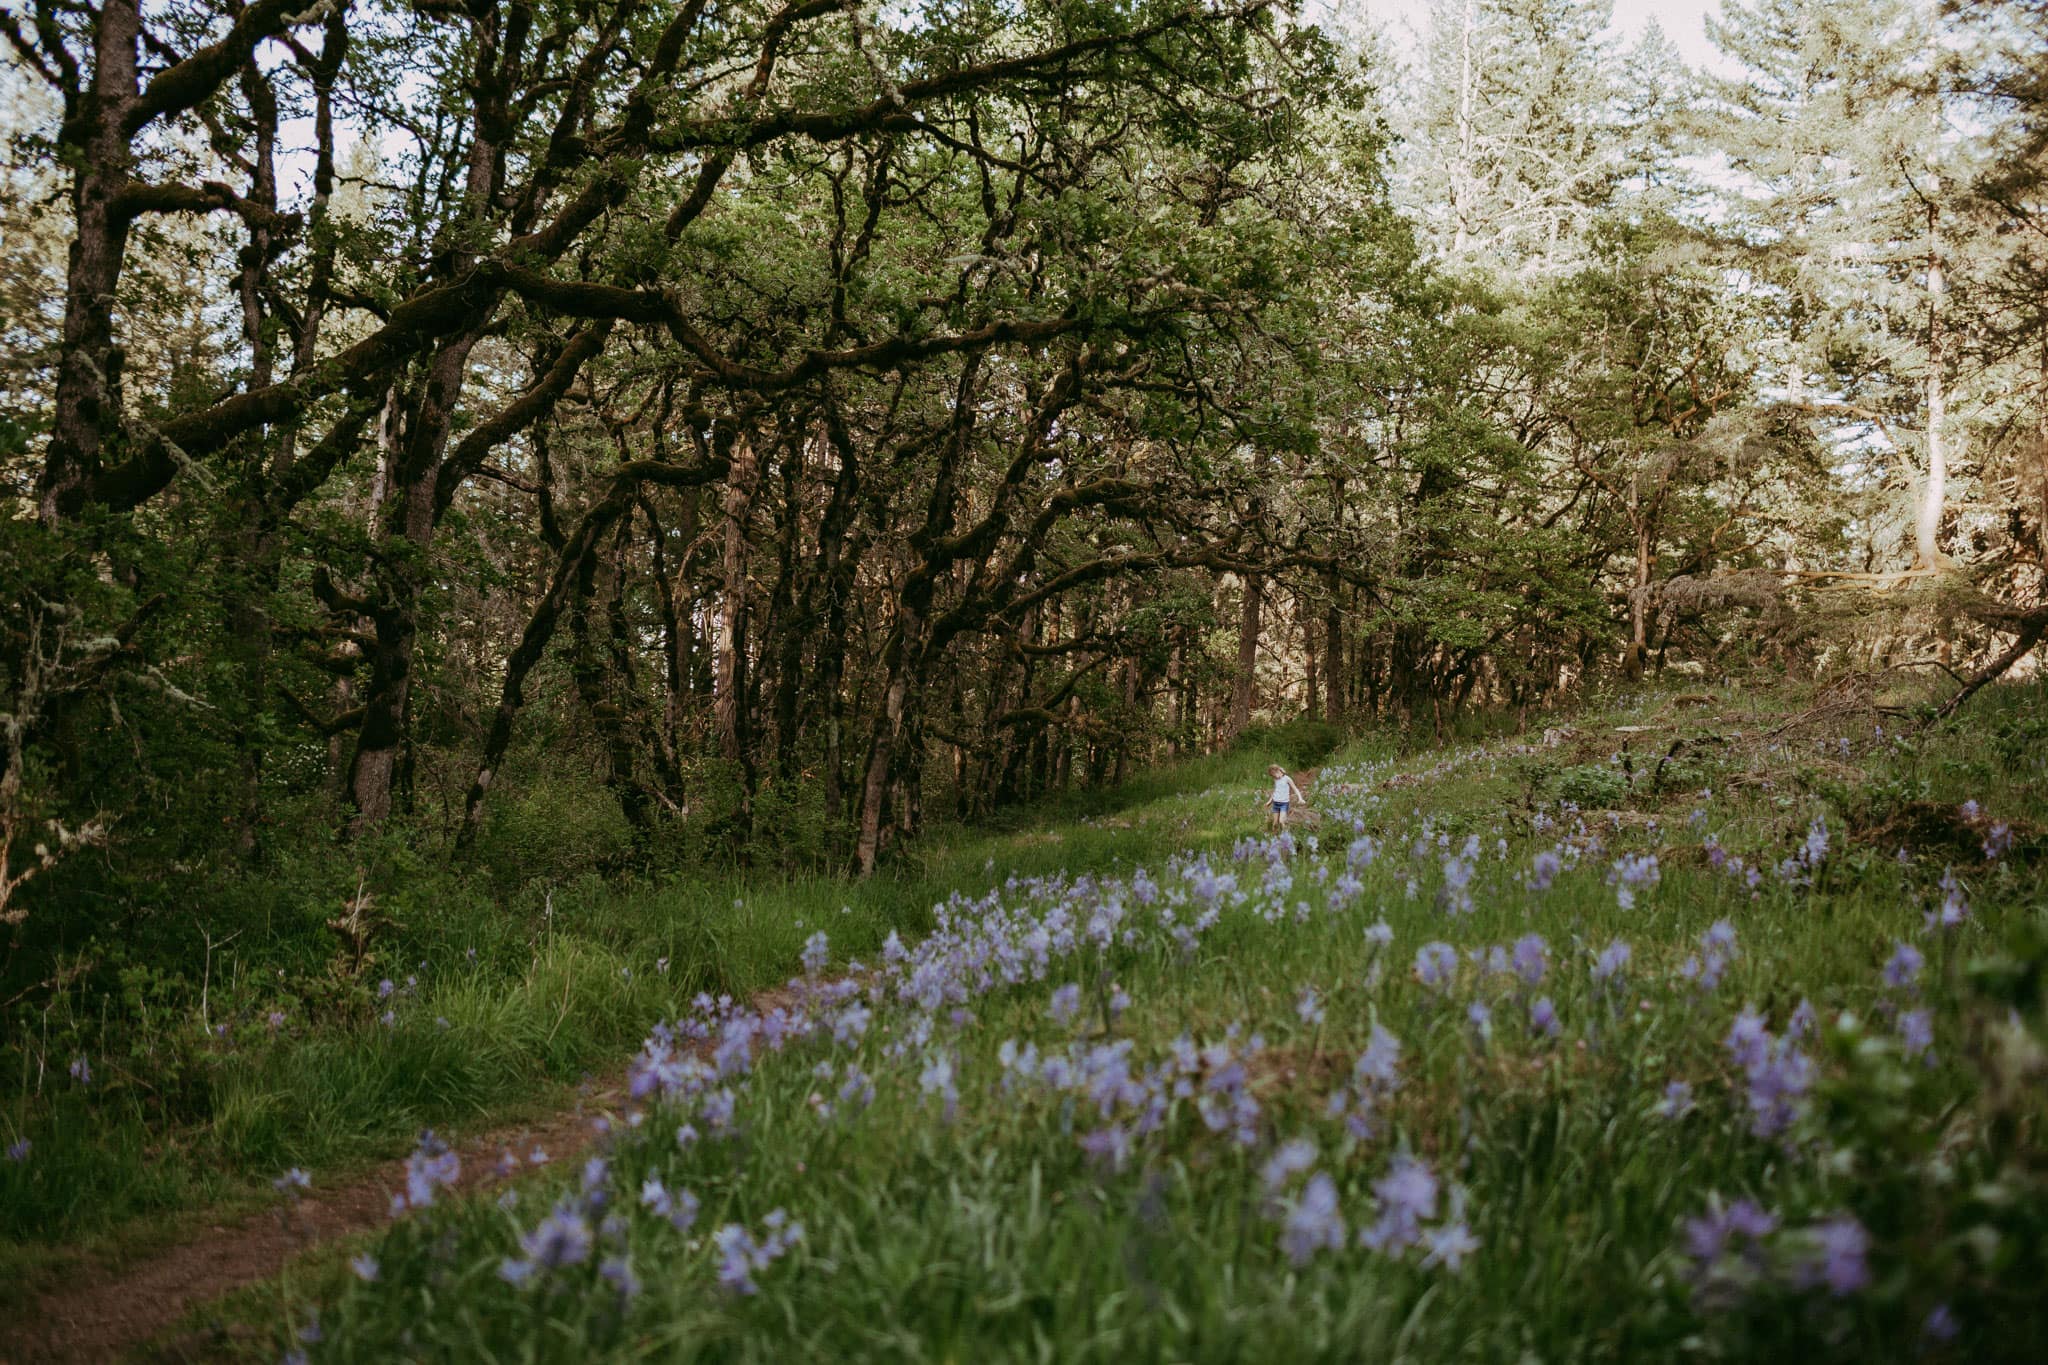  Camas Lily Fields in der Nähe von Portland Oregon / Frühlingsblumen